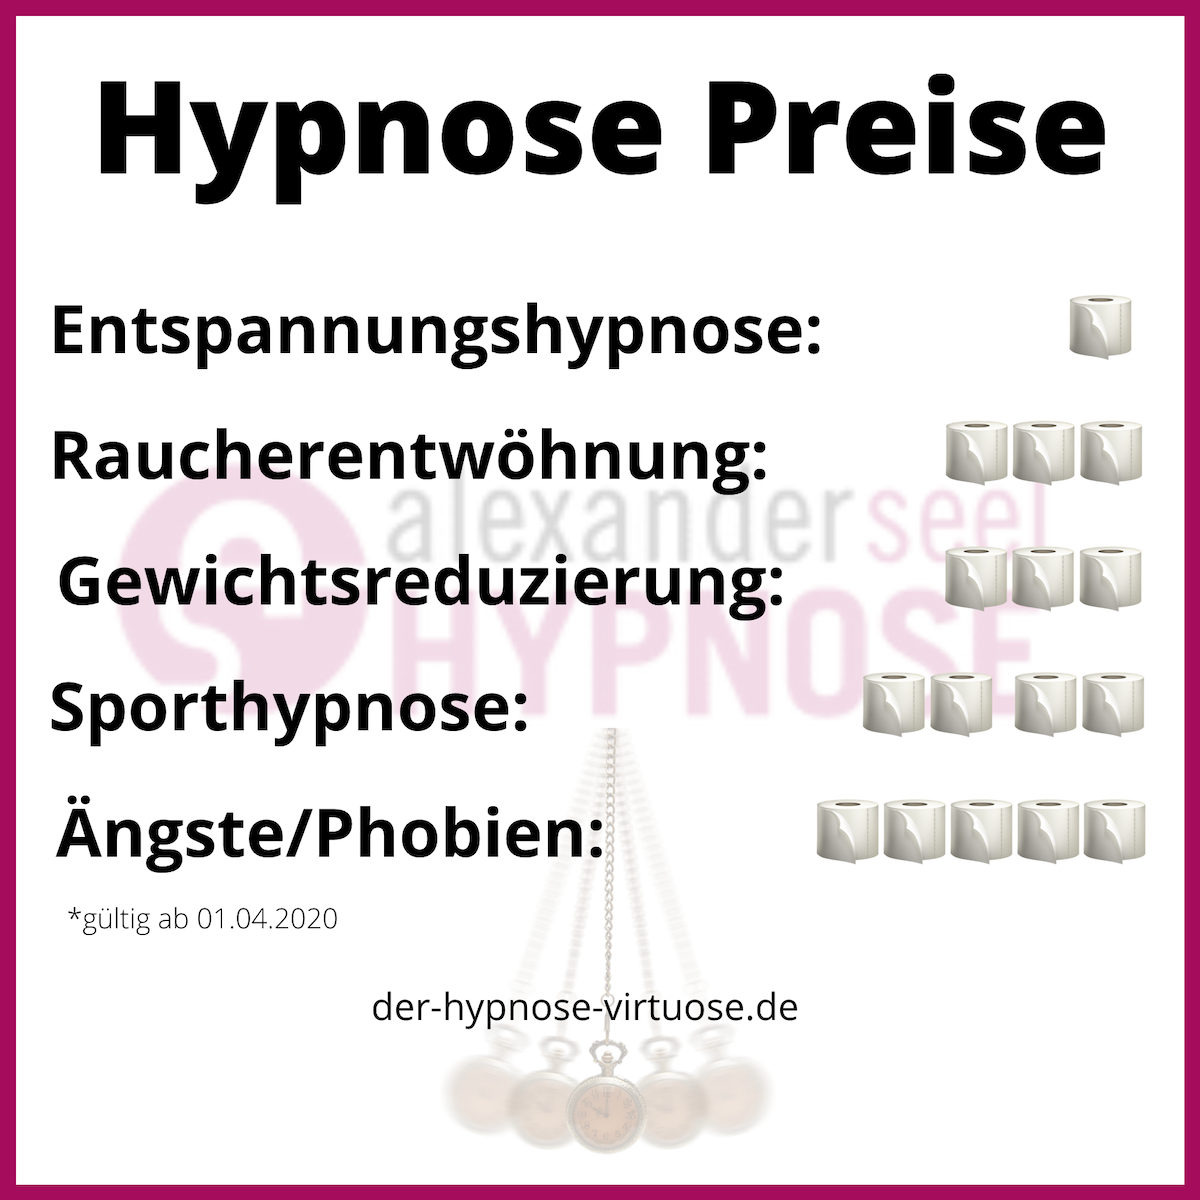 Hypnose Preise Hypnosesitzungen Meme Coronavirus Klopapier Aprilscherz